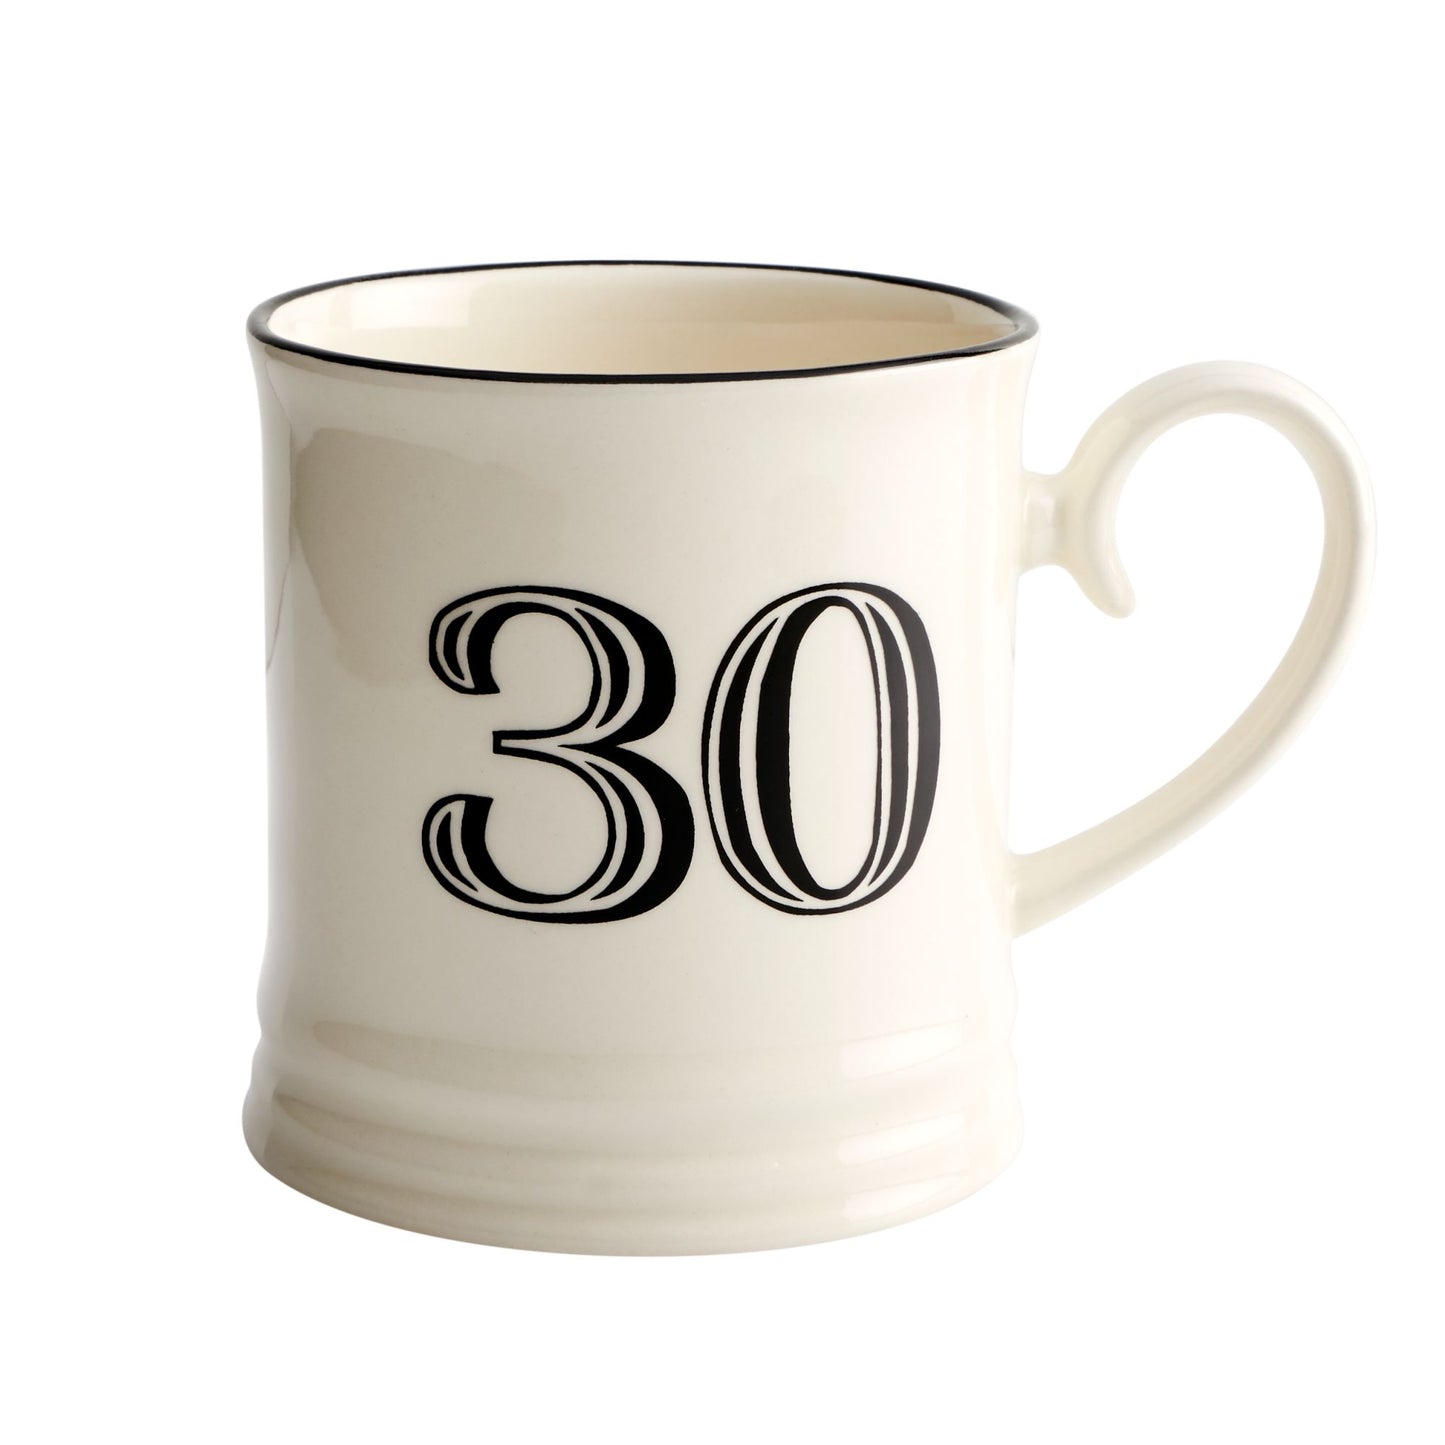 Fairmont & Main 30 - Tankard Mug